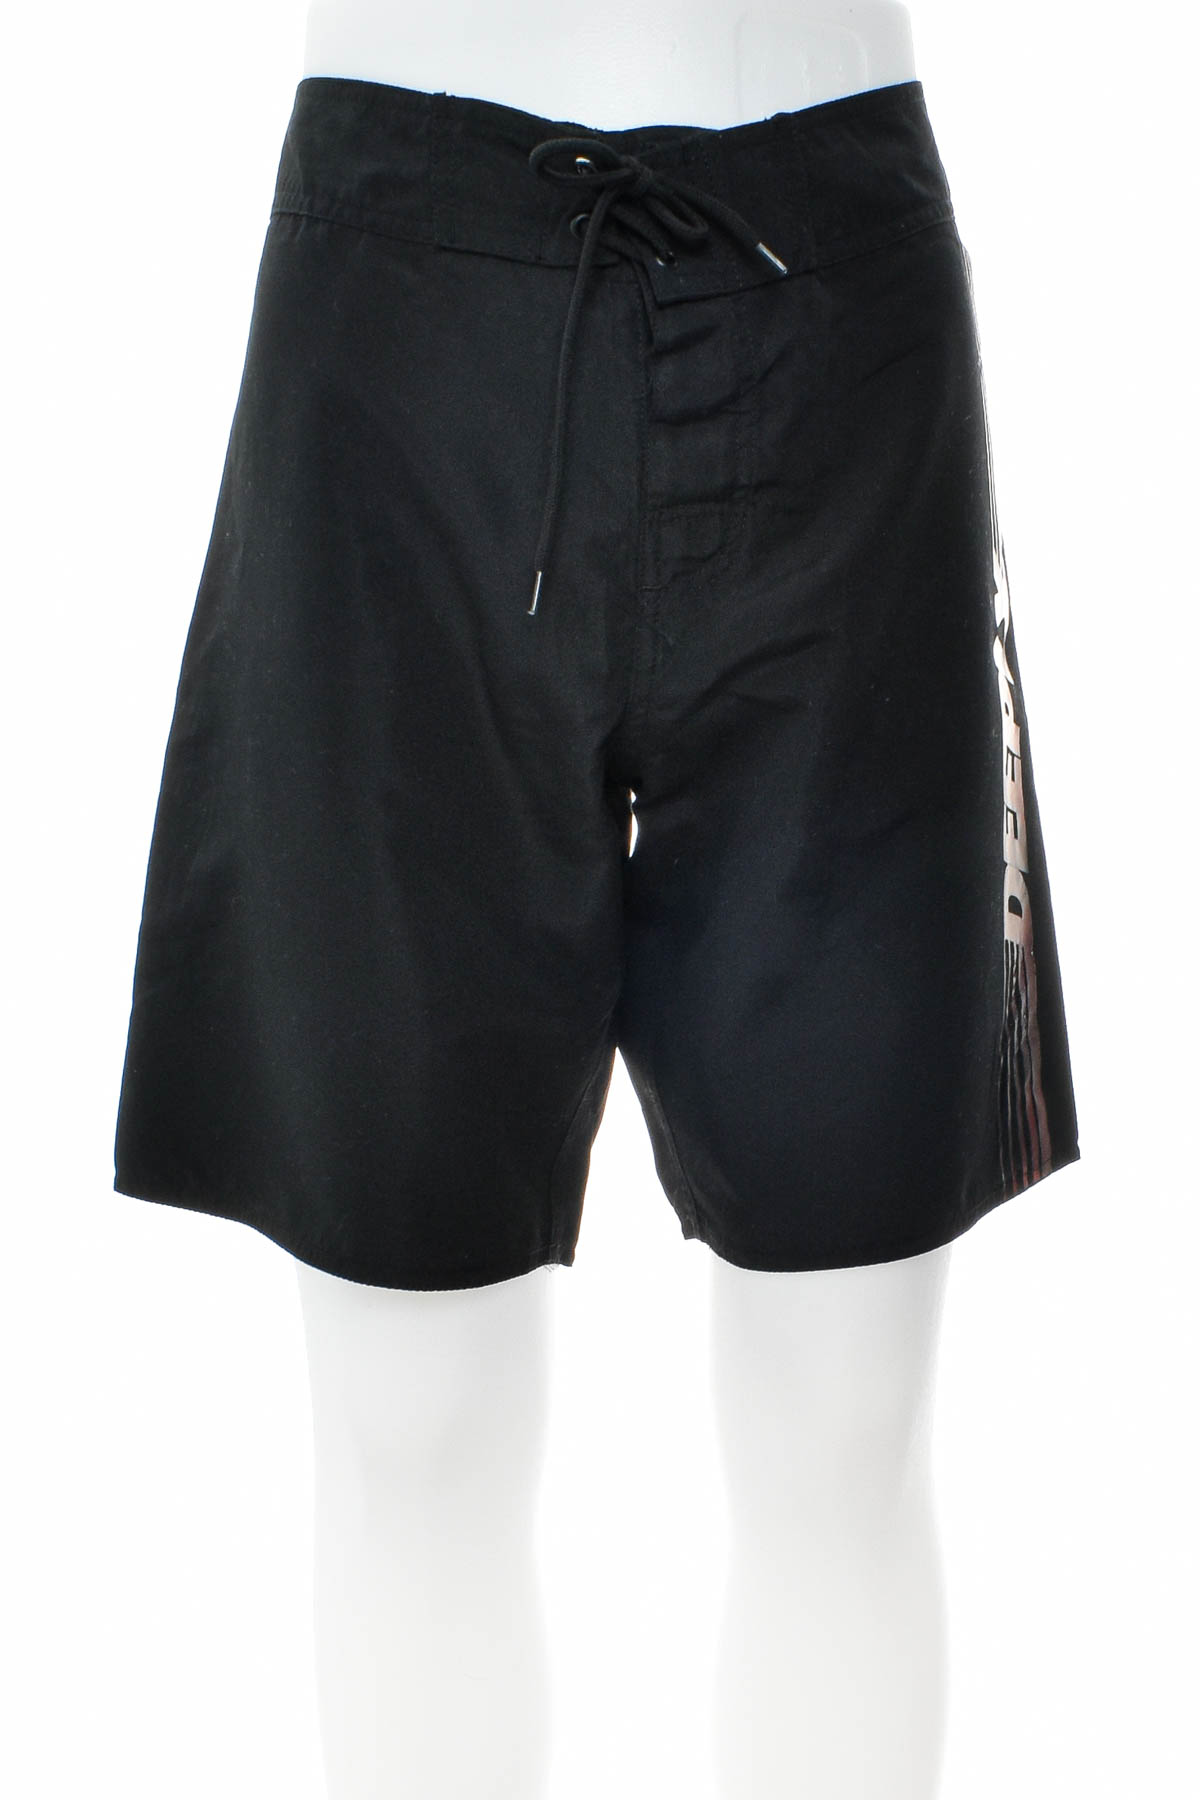 Men's shorts - DEEPLY - 0